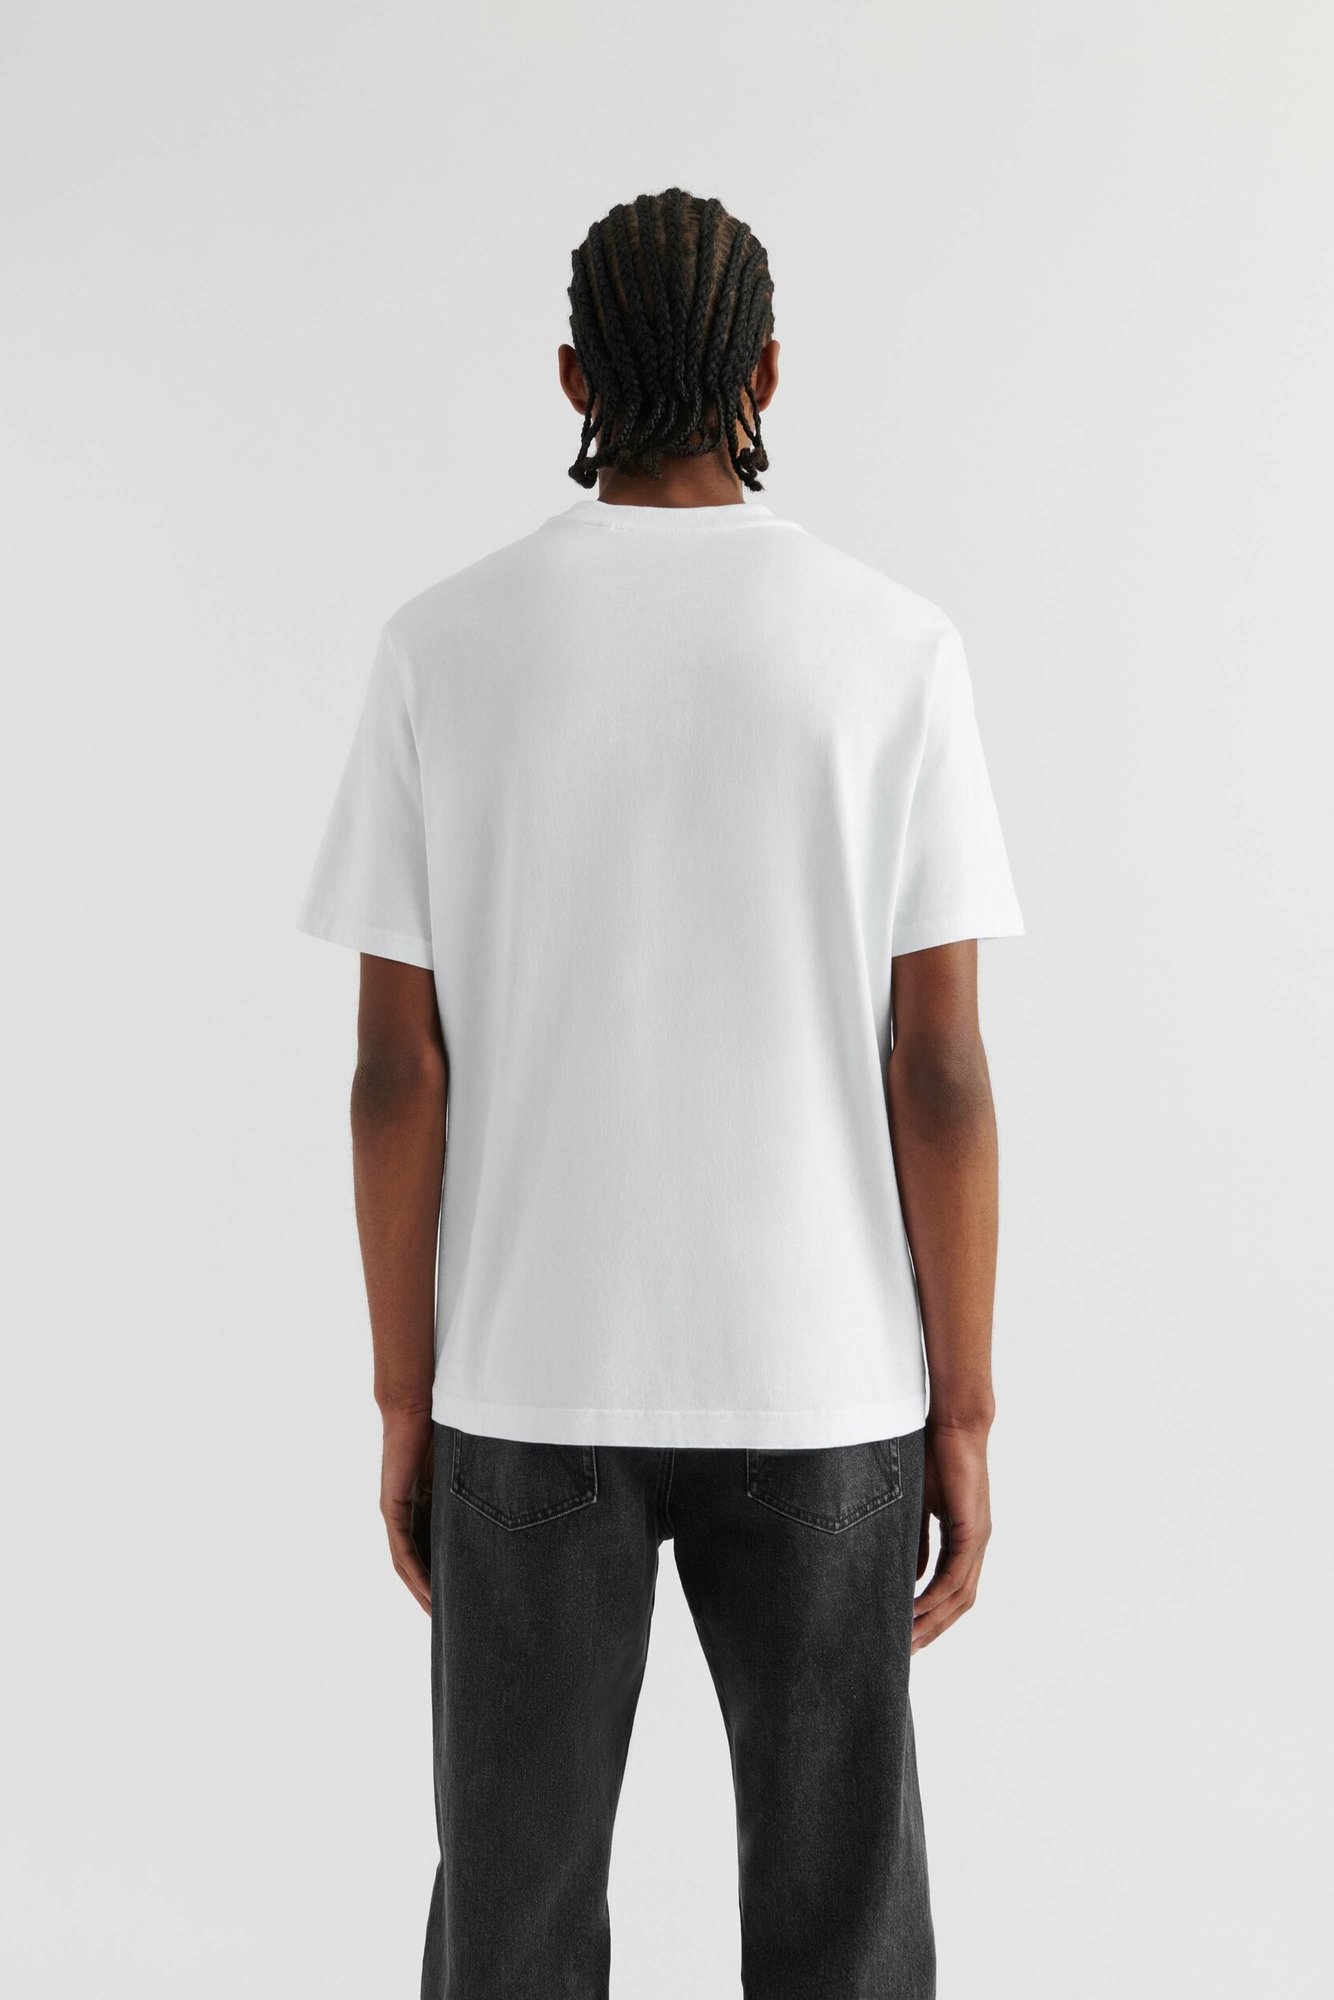 AXEL ARIGATO Signature T-Shirt in White M